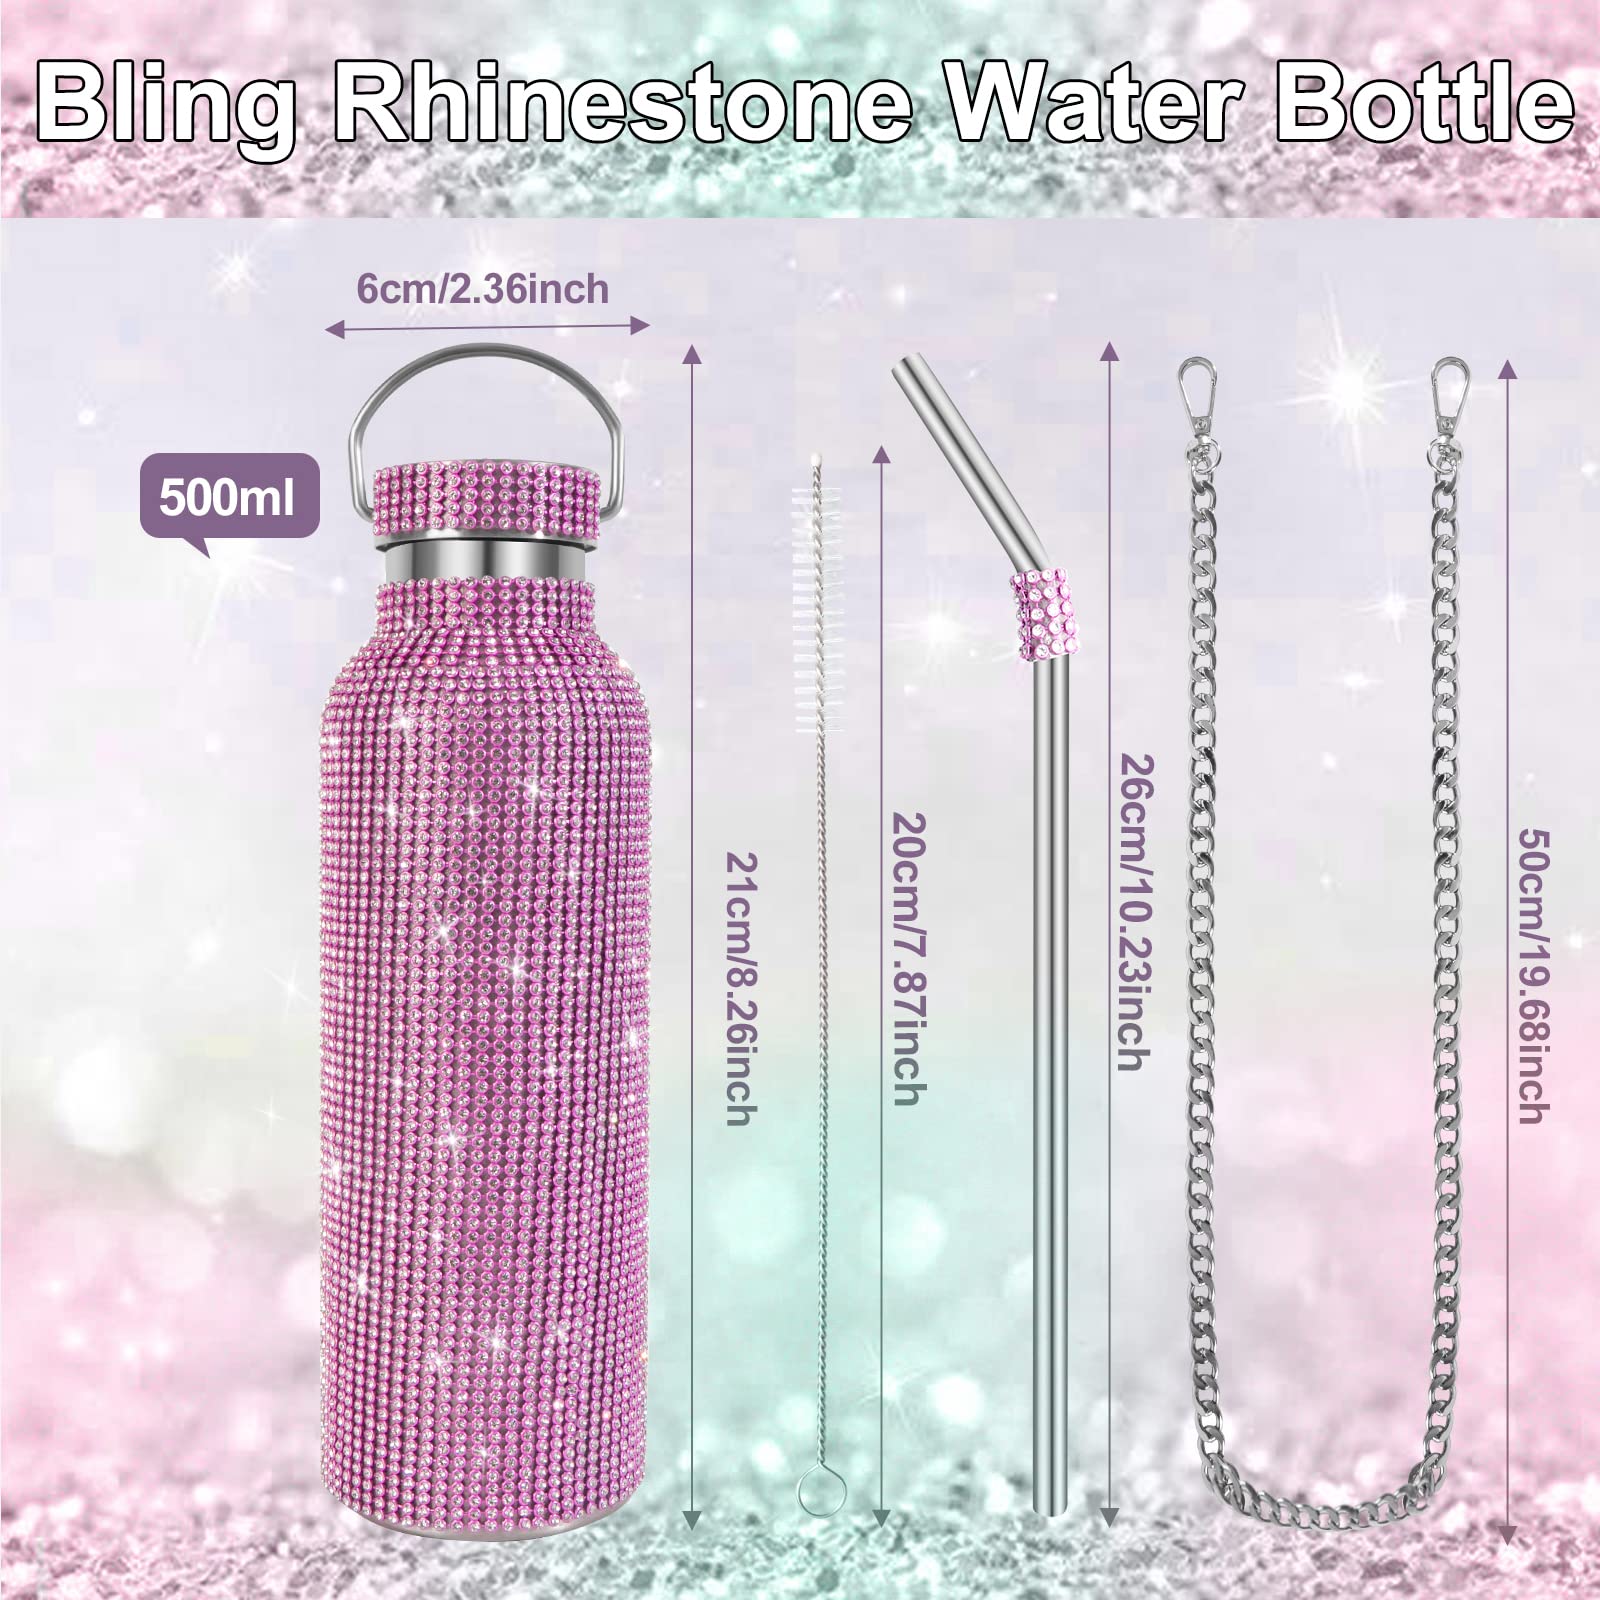 INSTOME Sparkling Diamond Water Bottle,17oz Bling Water Bottle with Chain,Bling Water Bottle Rhinestone,Rhinestone Glitter Water Bottle for Women Girl